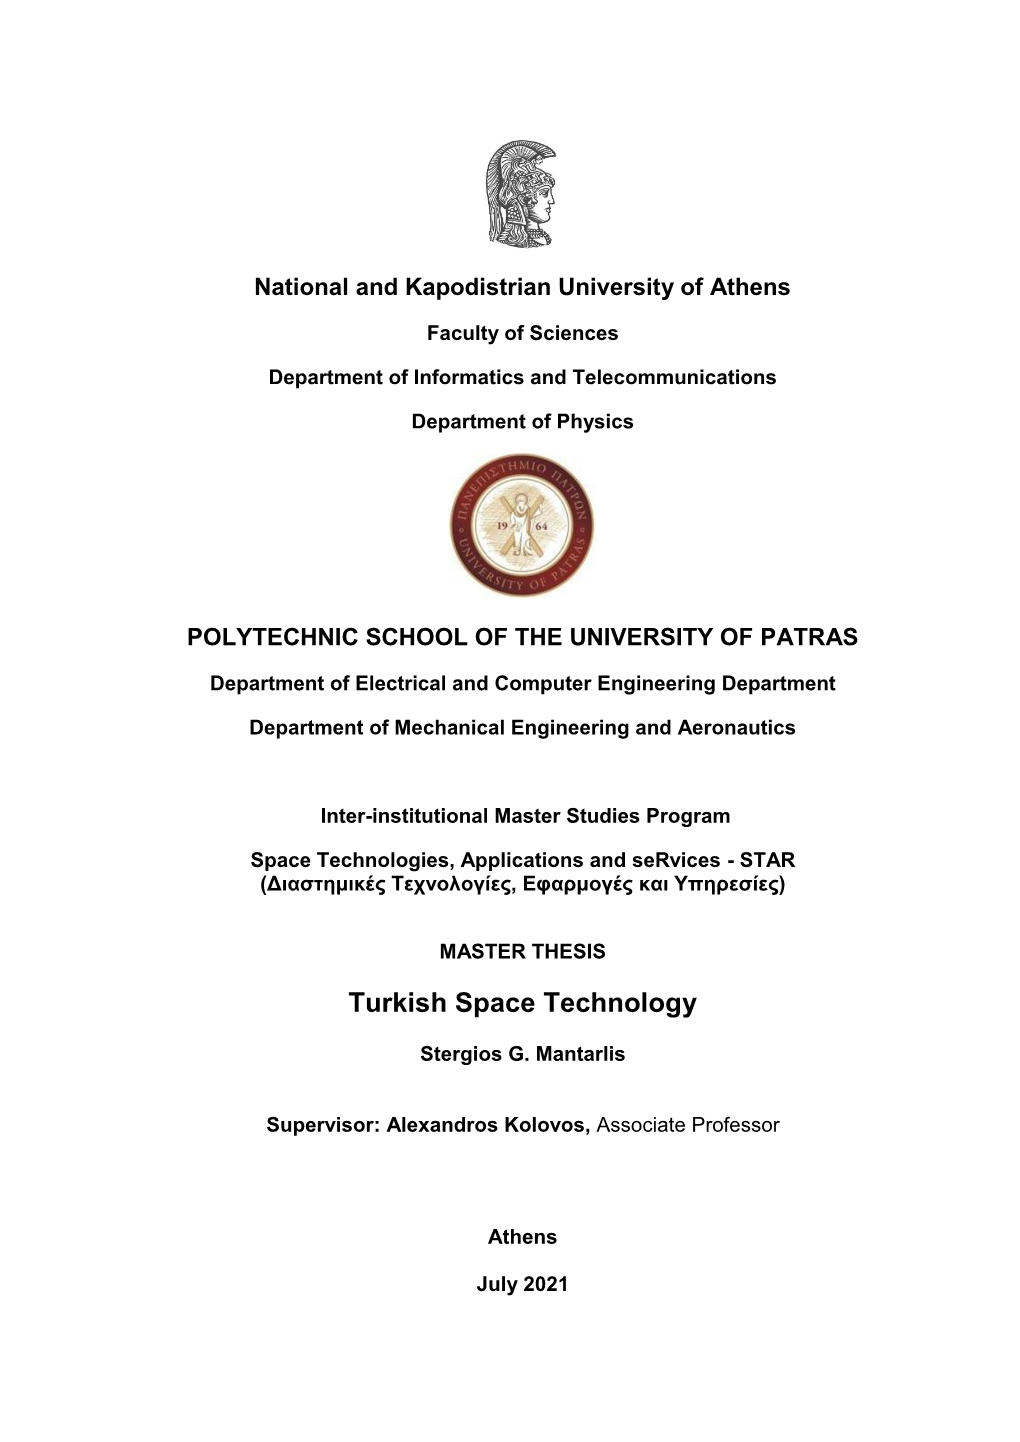 Turkish Space Technology